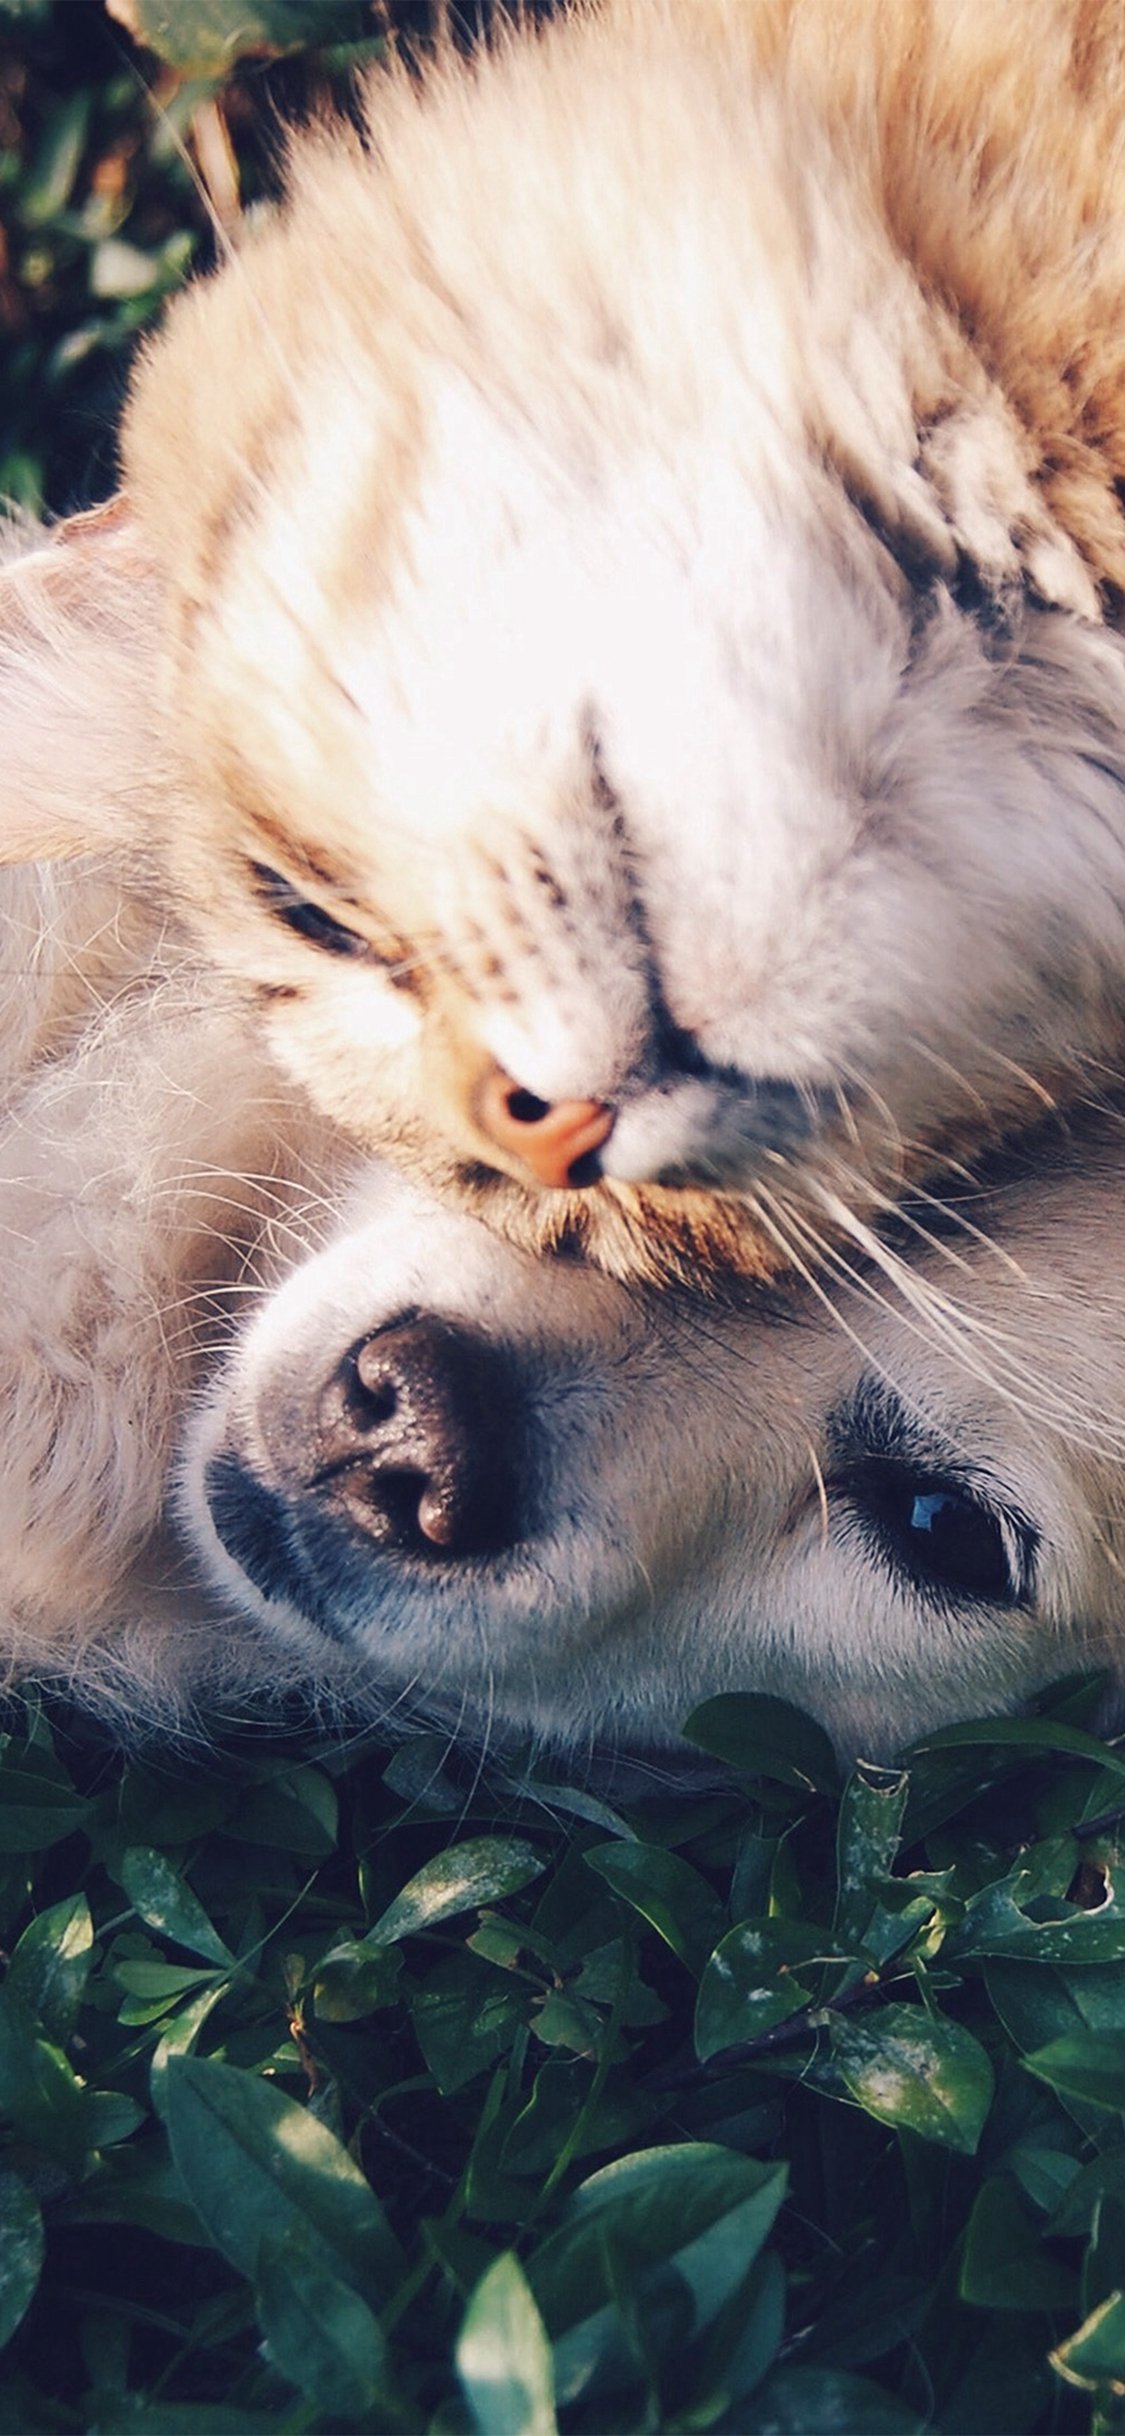 Best Pets & Animals iPhone X Wallpaper Free HD